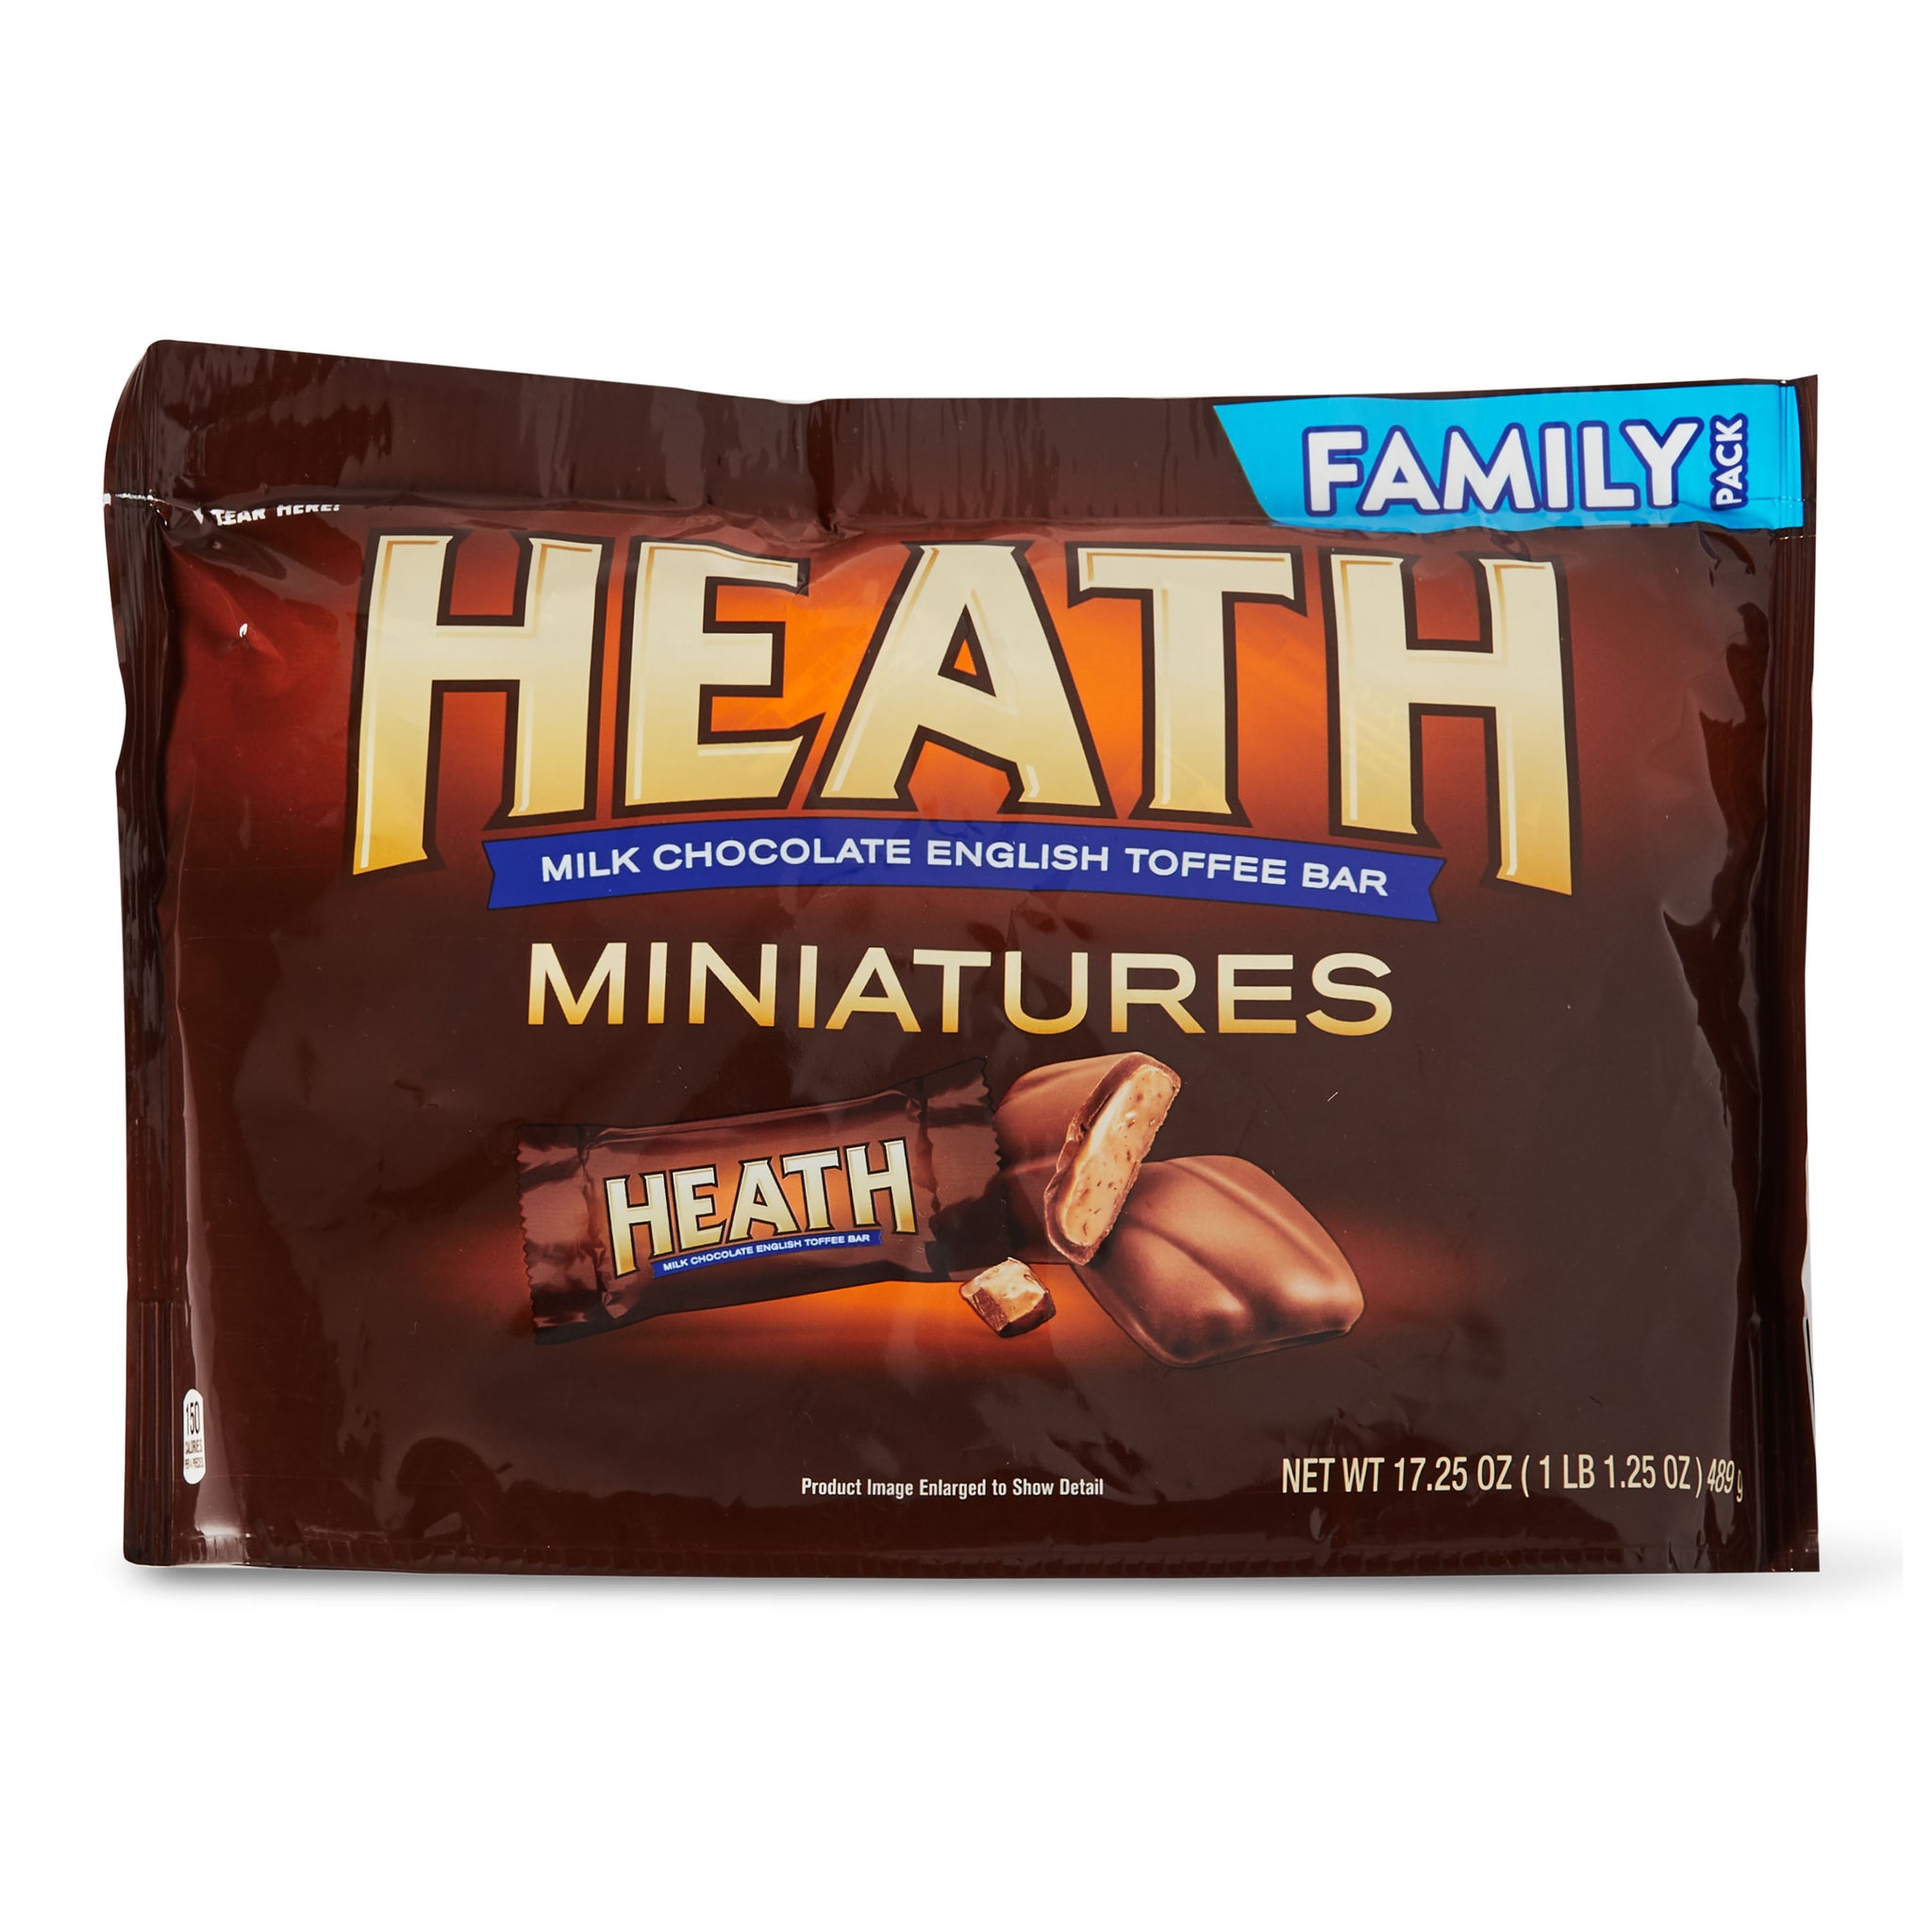 Heath Milk Chocolate Toffee Bar Miniatures, Family Pack, 17.25oz